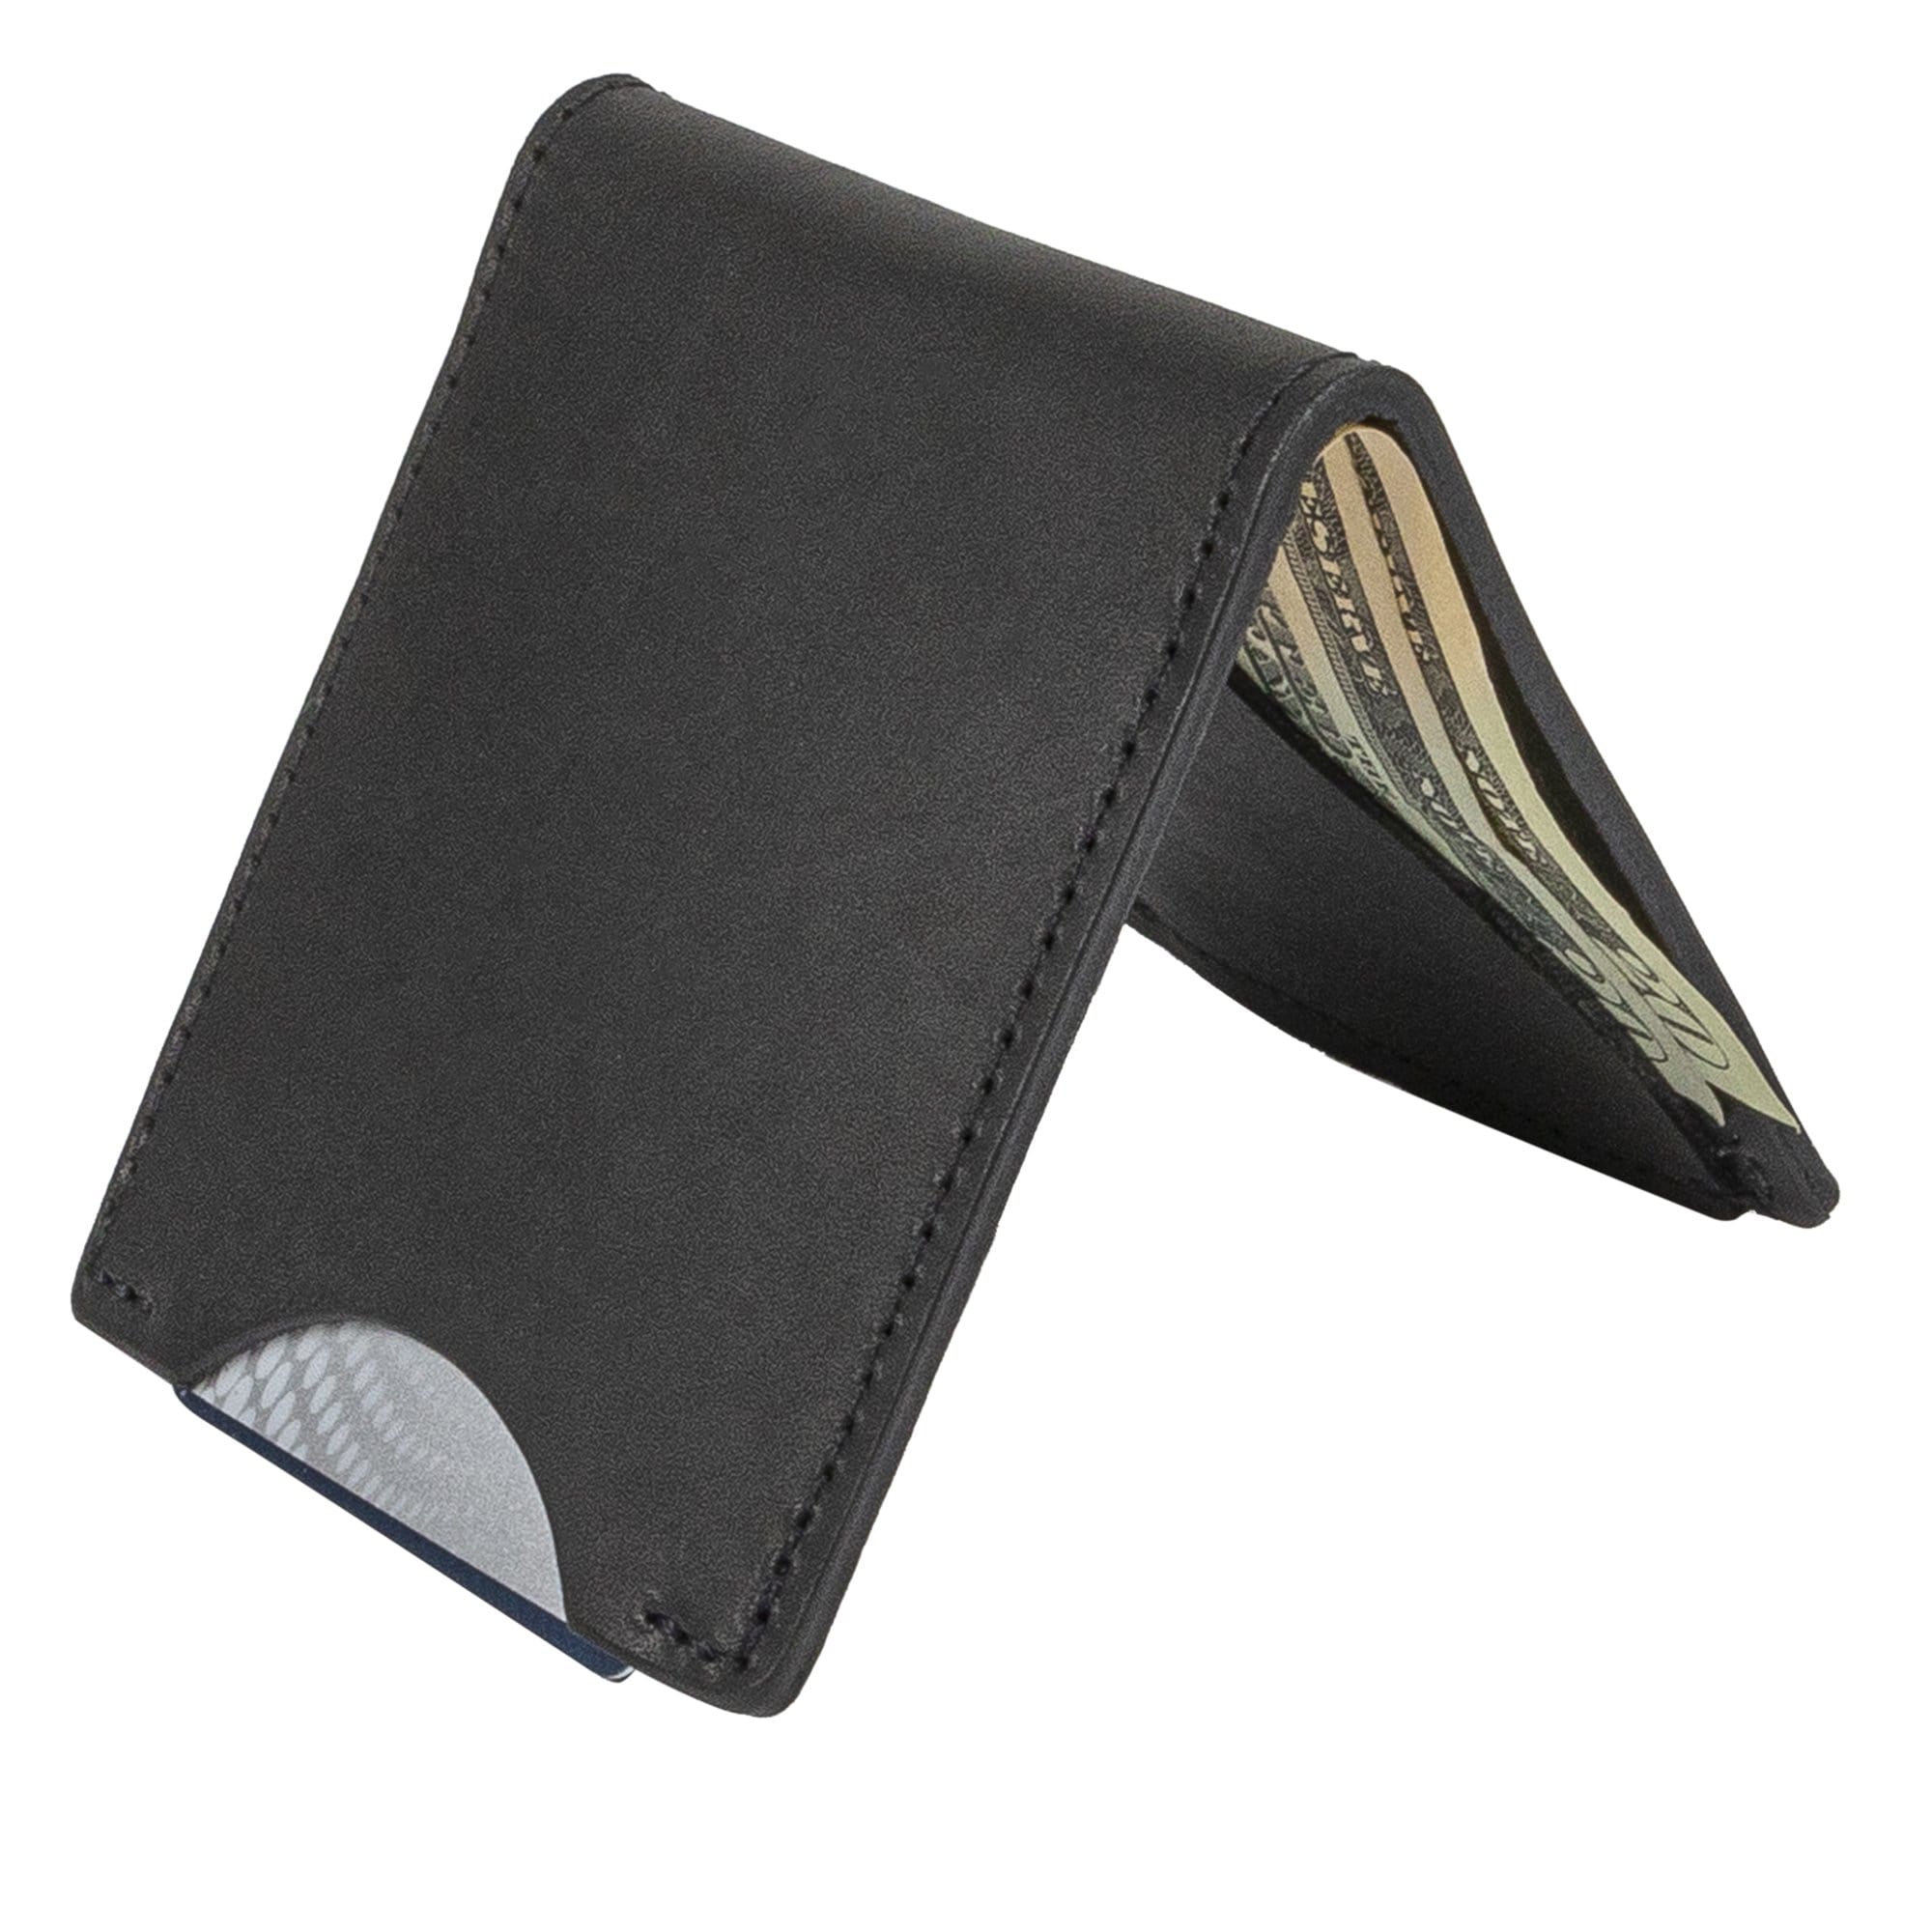 Main Street Forge Wallet Midnight Black Front Pocket Slim Bifold Wallet for Men | Made in USA 816895023549